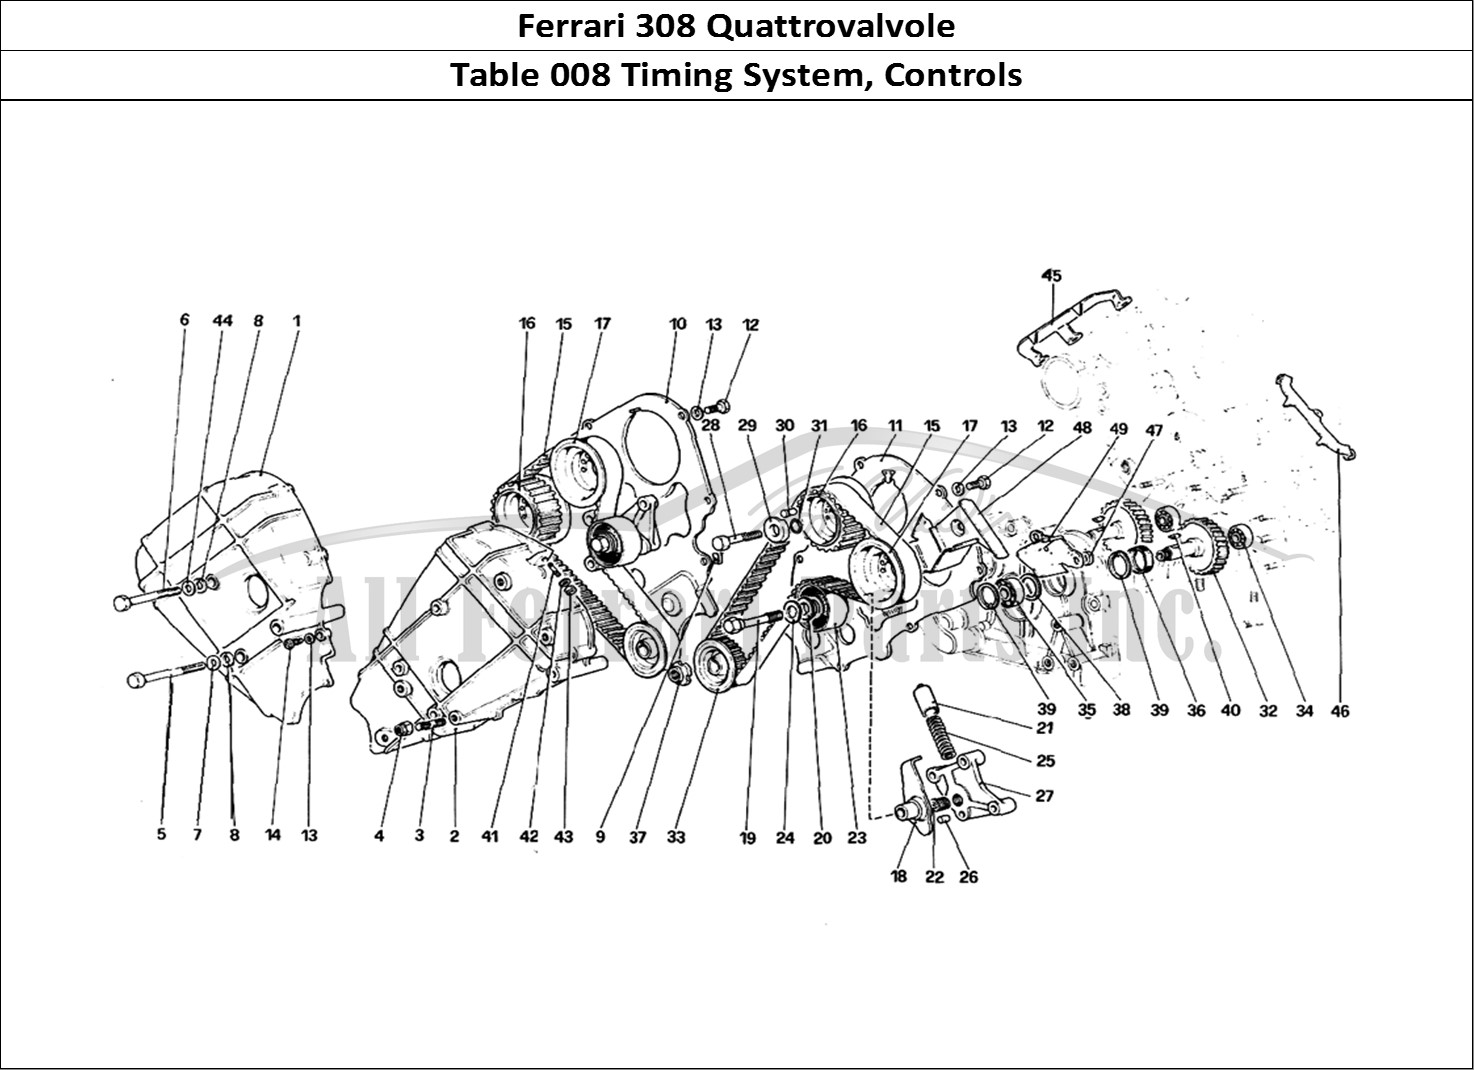 Ferrari Parts Ferrari 308 Quattrovalvole (1985) Page 008 Timing System - Controls